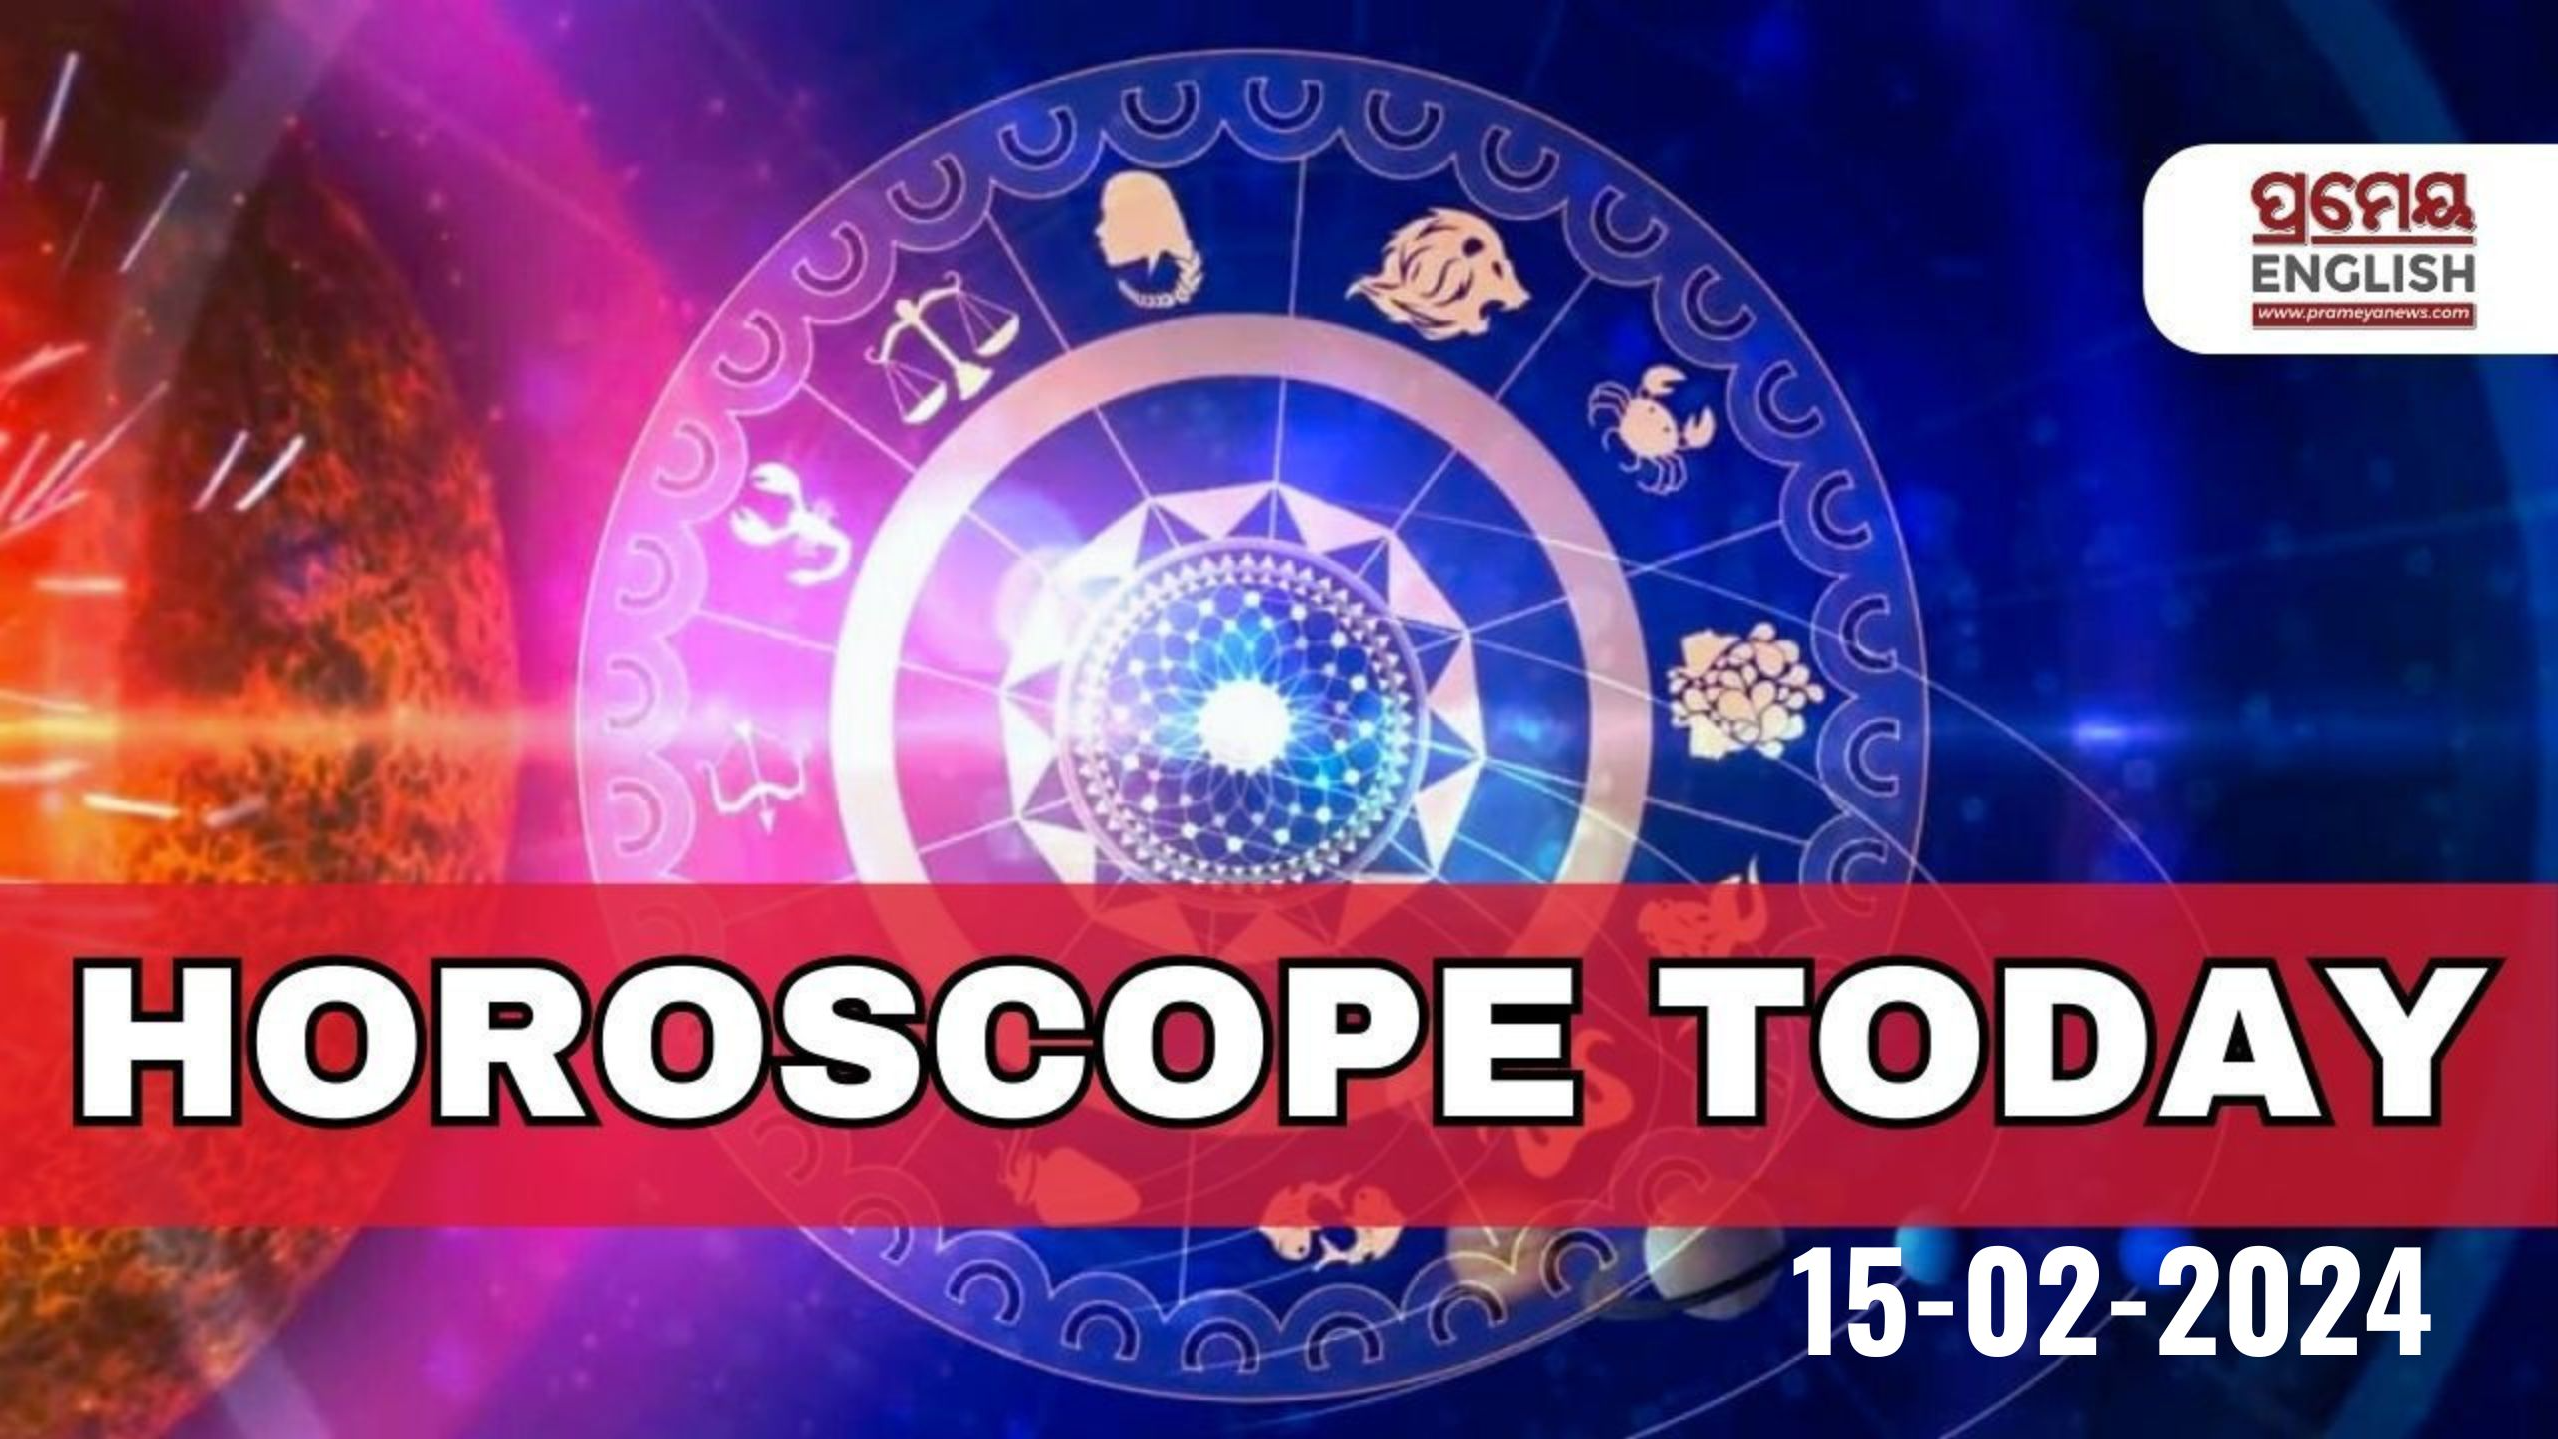 Daily Horoscope: Jan 16, 2024 Astrology Forecast